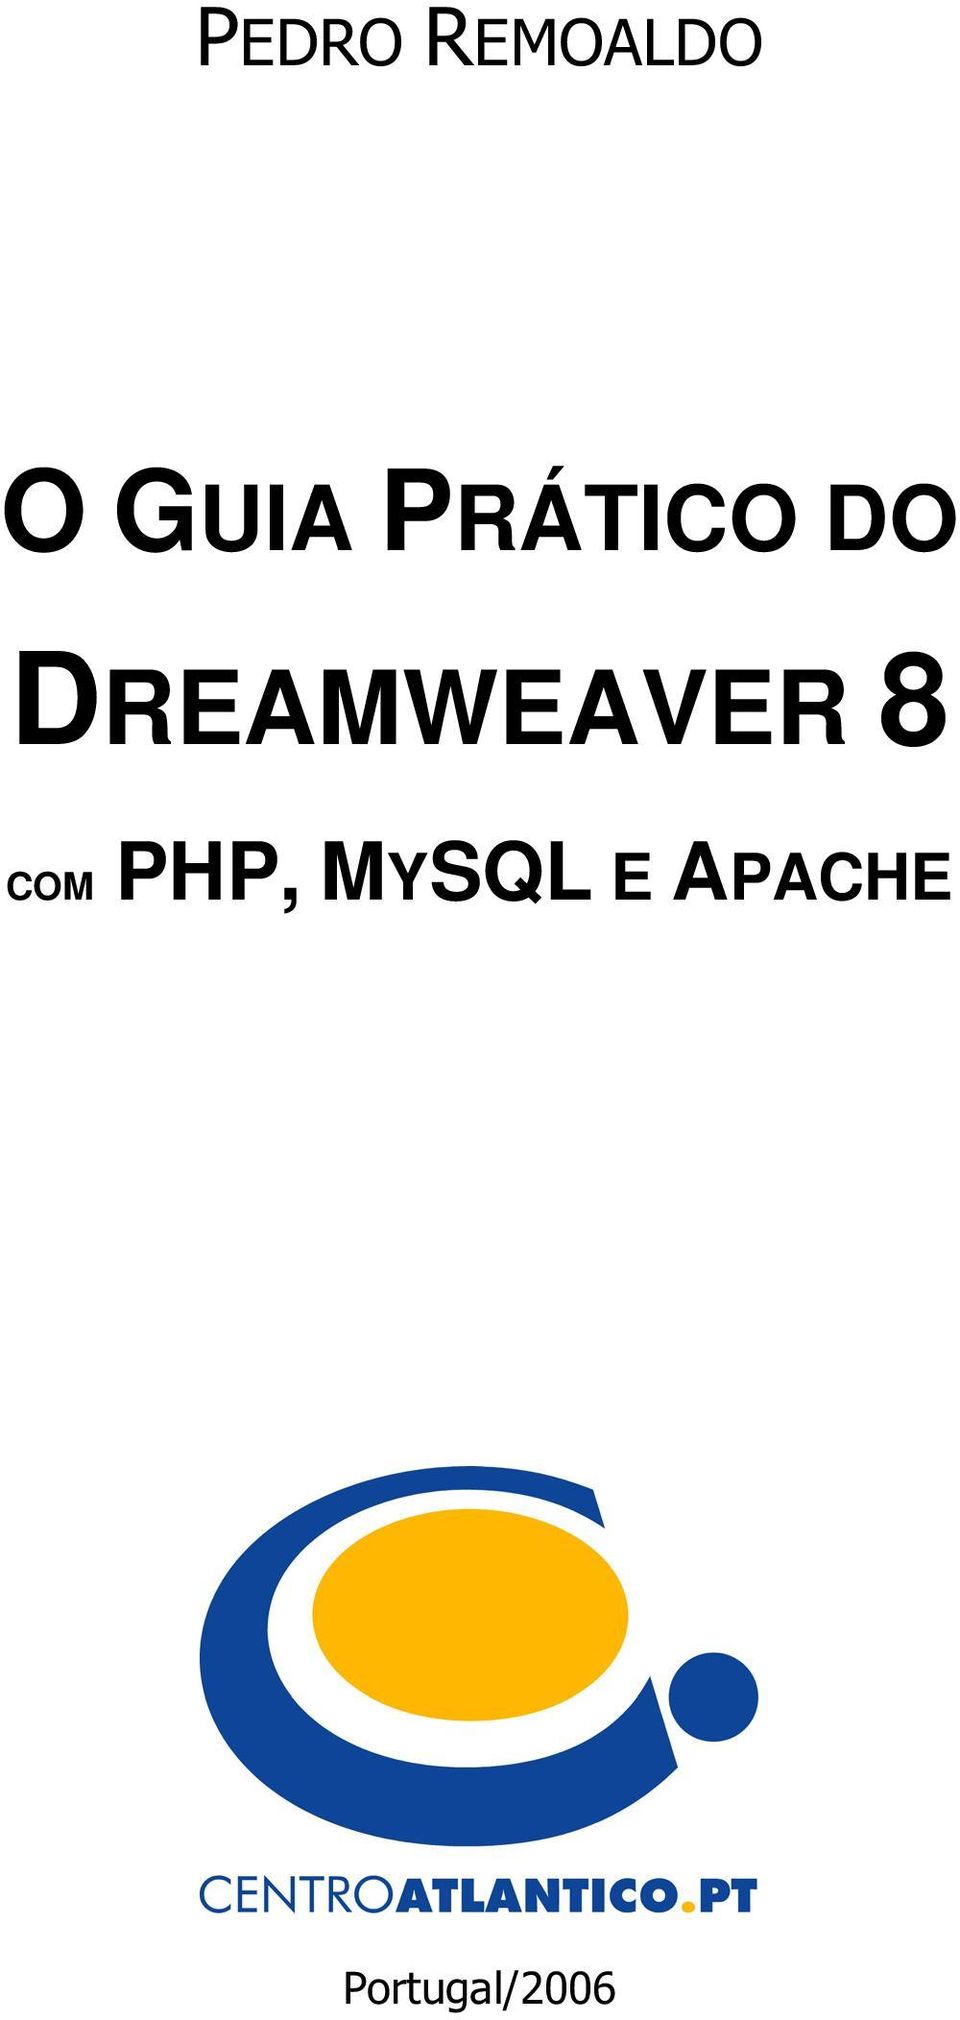 DREAMWEAVER 8 COM